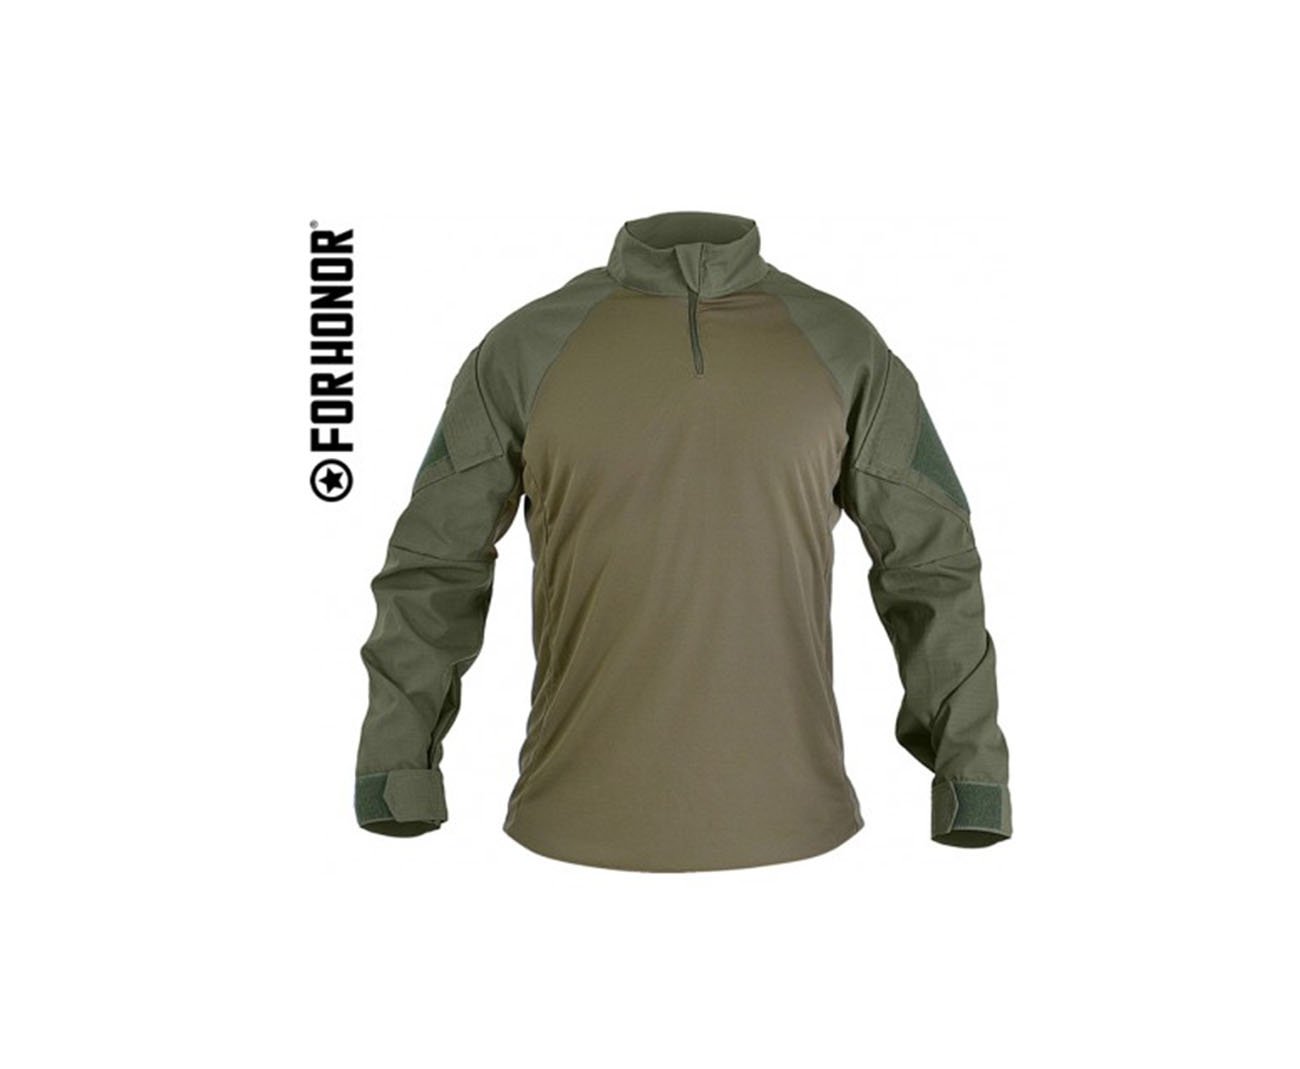 Camisa De Combate 711 Olive Drab (combat Shirt)- Forhonor